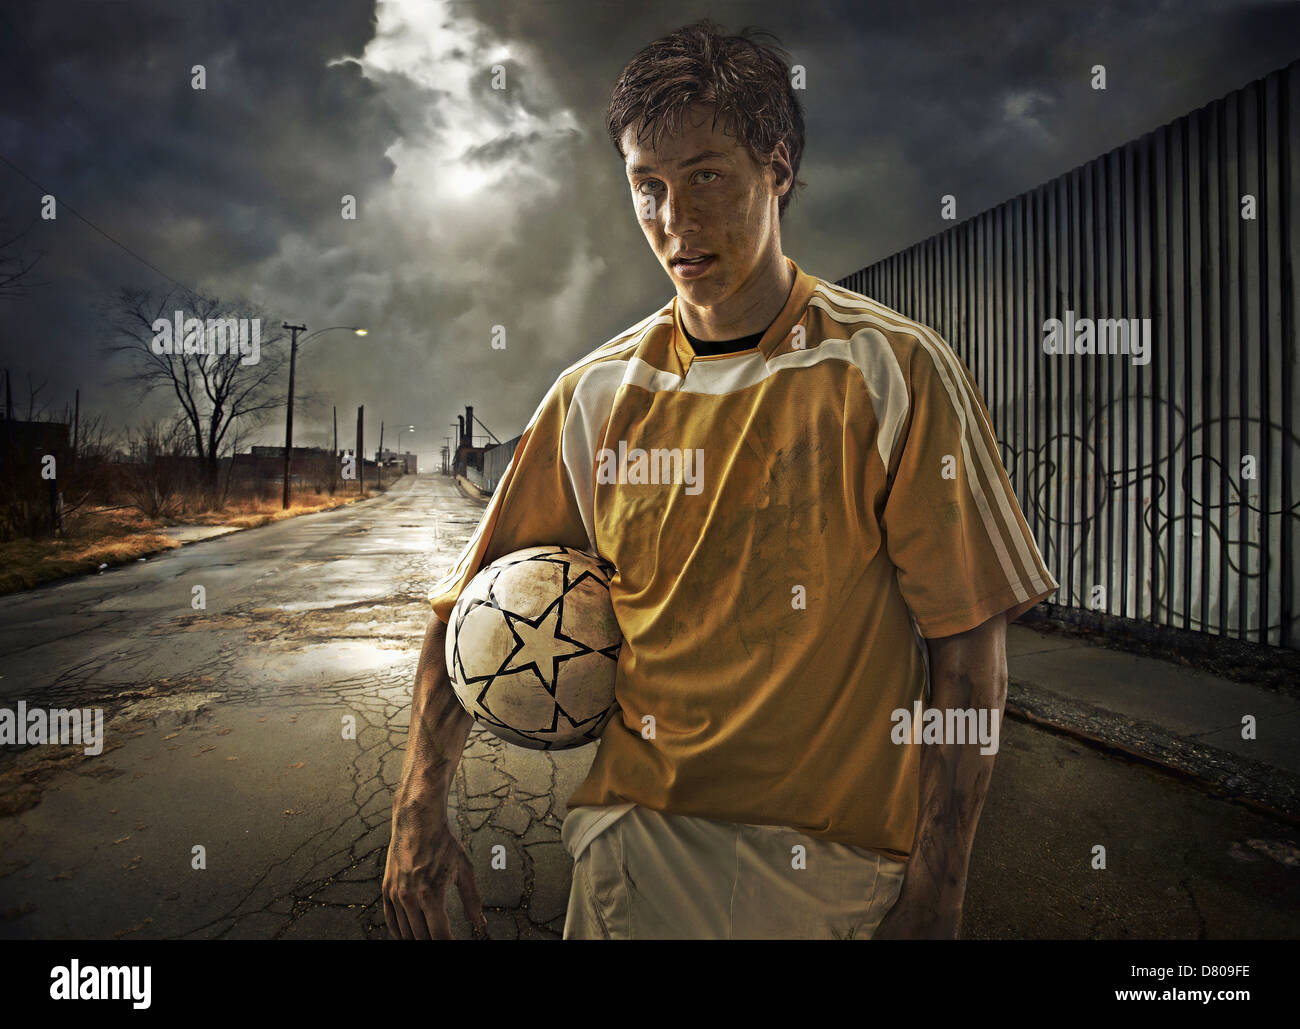 Illustration of soccer player holding ball on city street Stock Photo